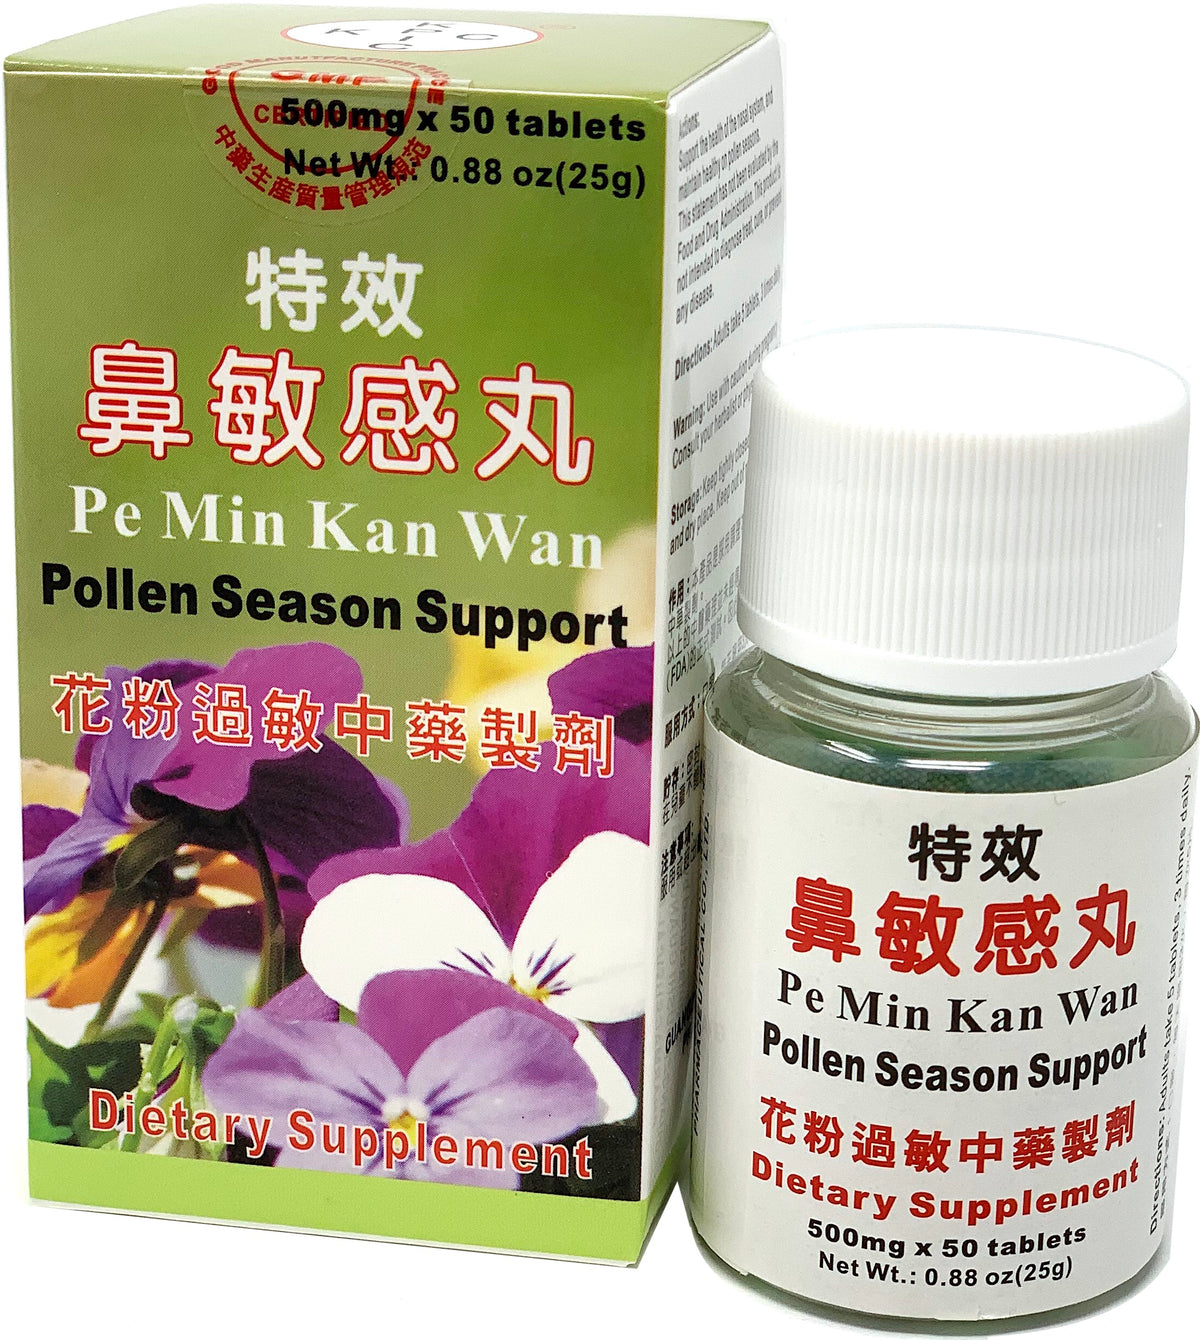 Pollen Season Support (Pe Min Kan Wan)